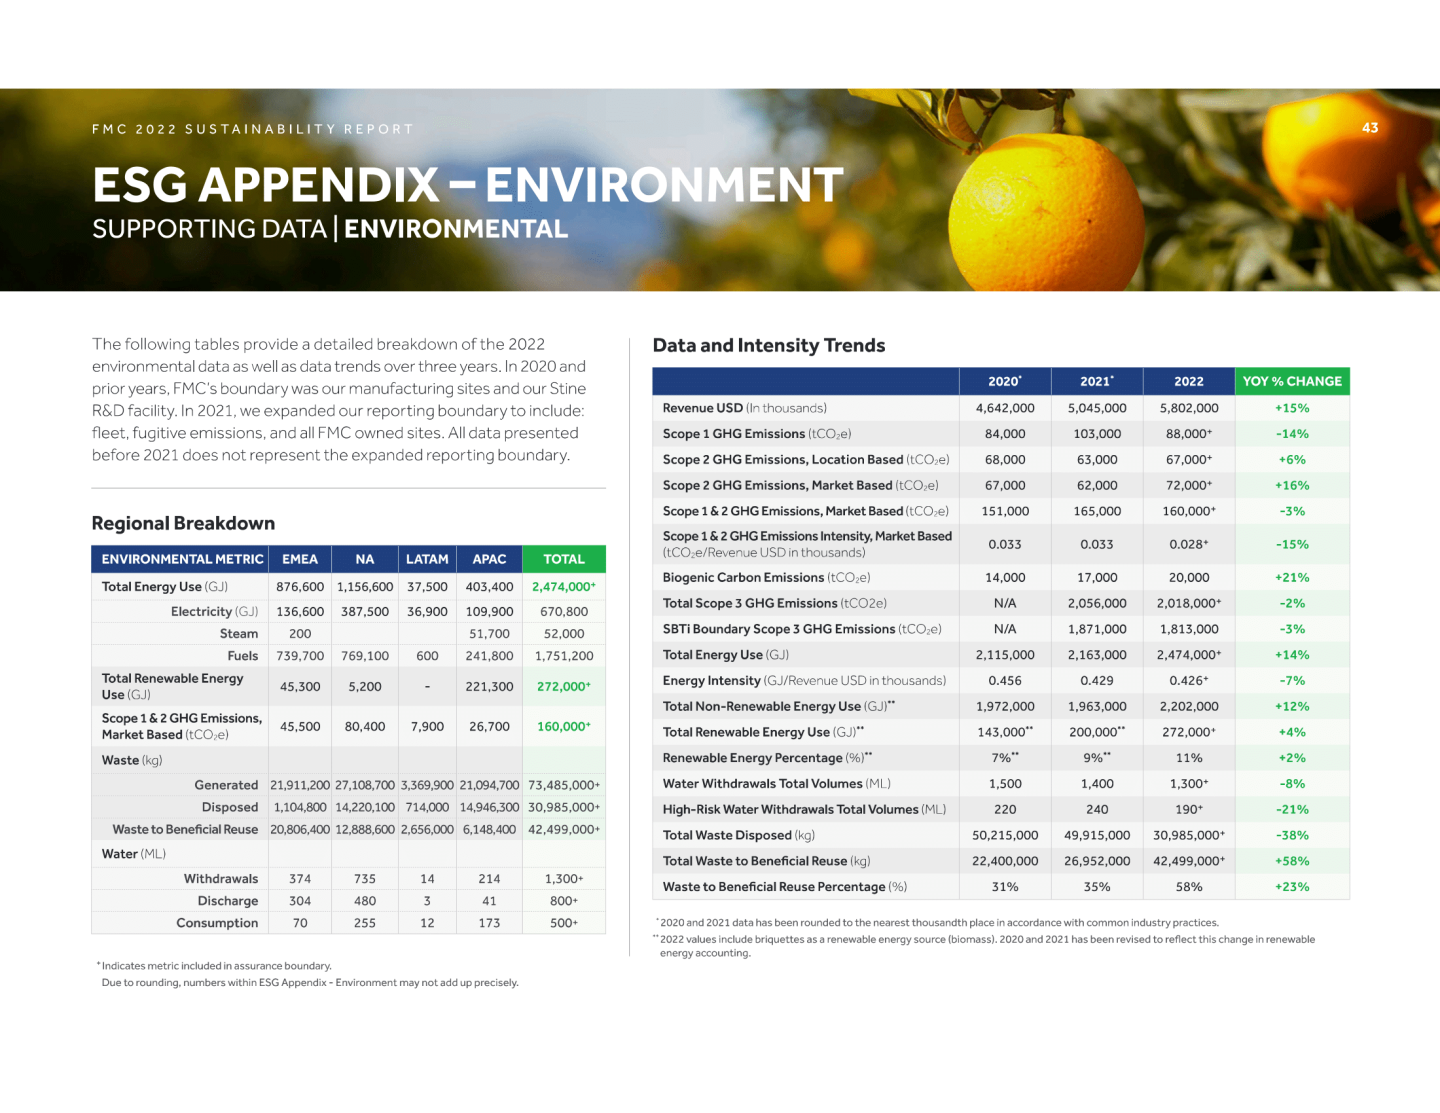 ESG APPENDIX - Environment